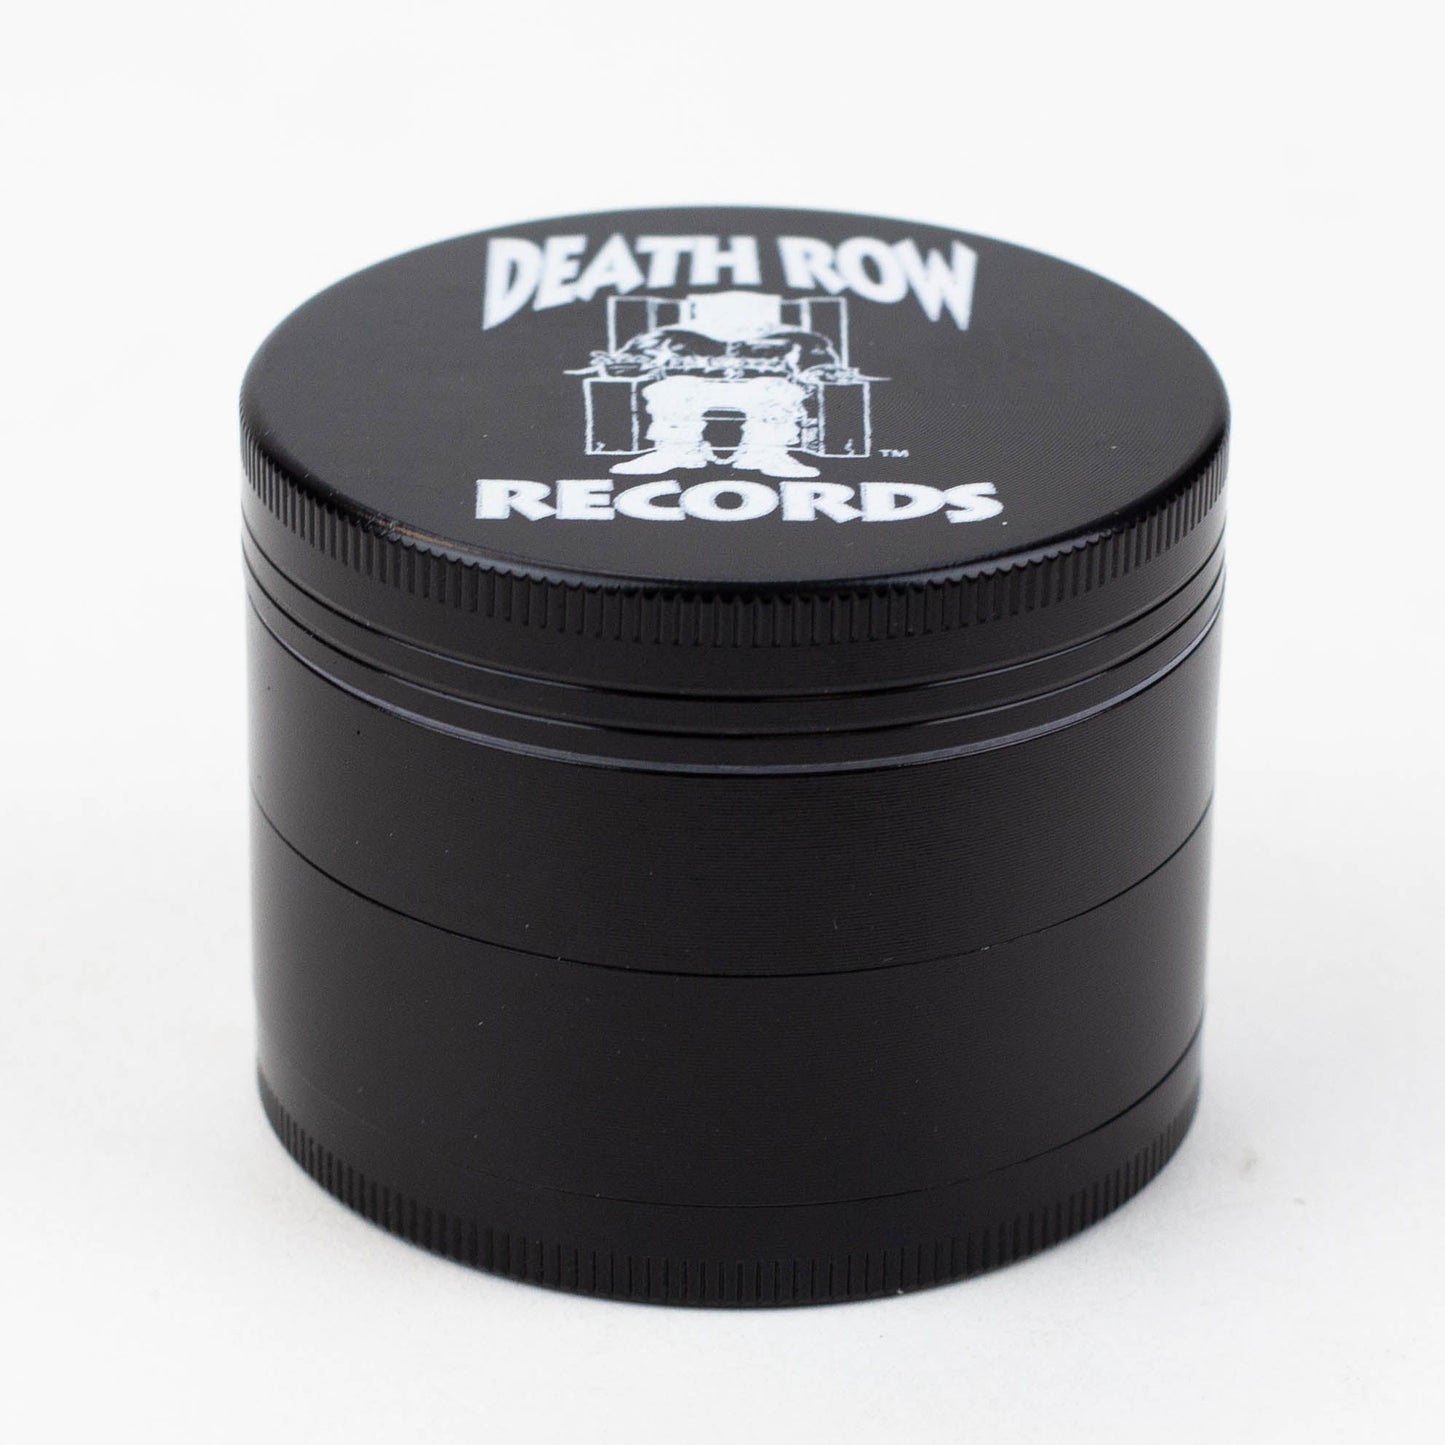 DEATH ROW - 4 parts metal black grinder by Infyniti_0